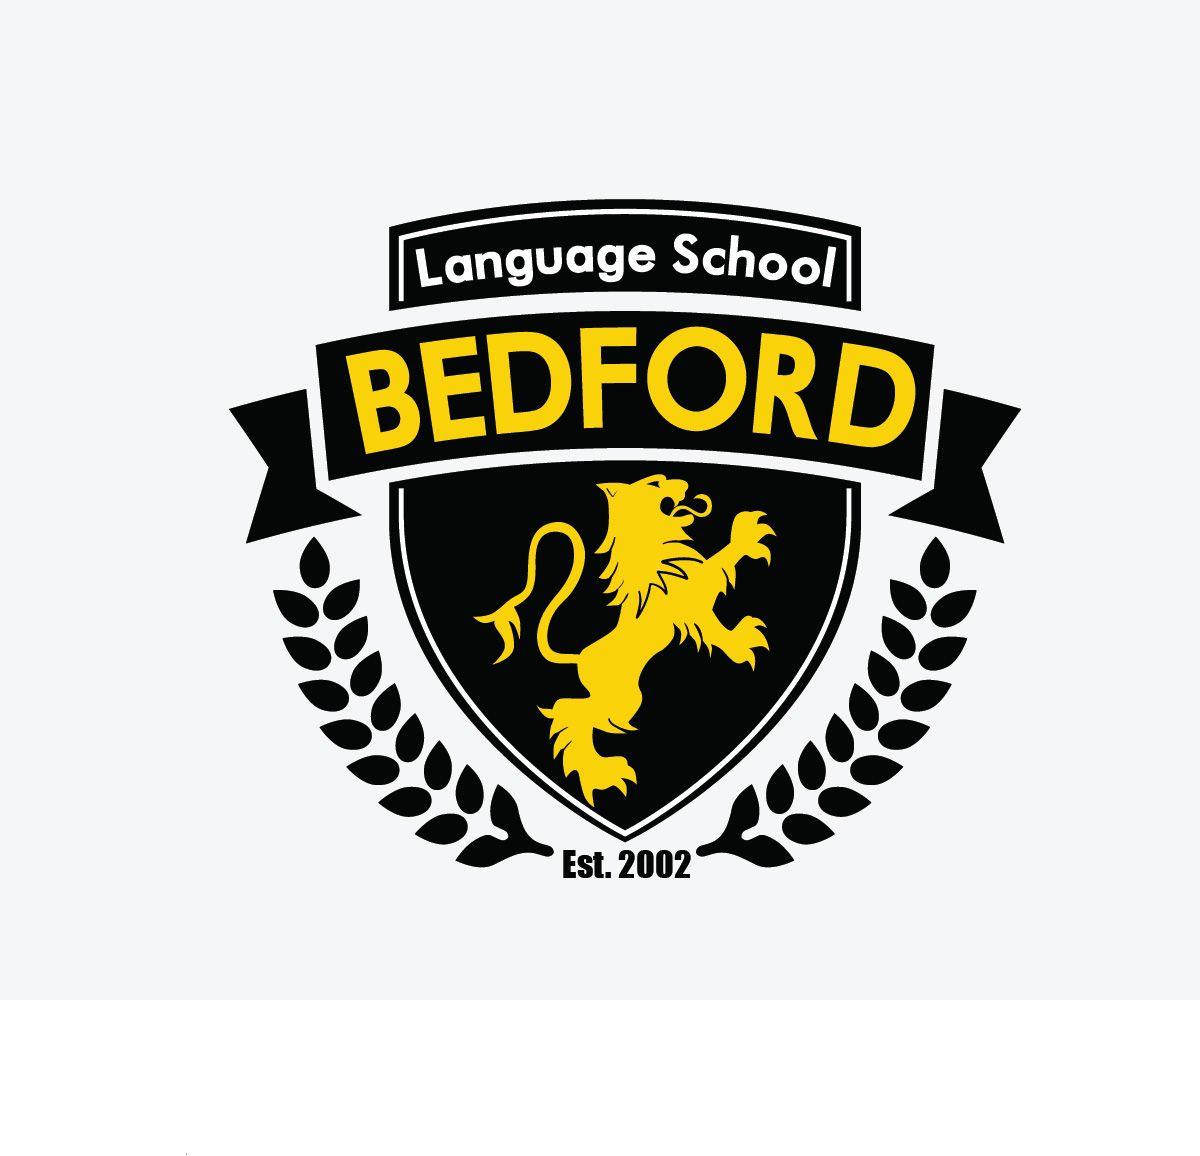 Bedford Logo - Bold, Professional, Logistic Logo Design for Bedford Language School